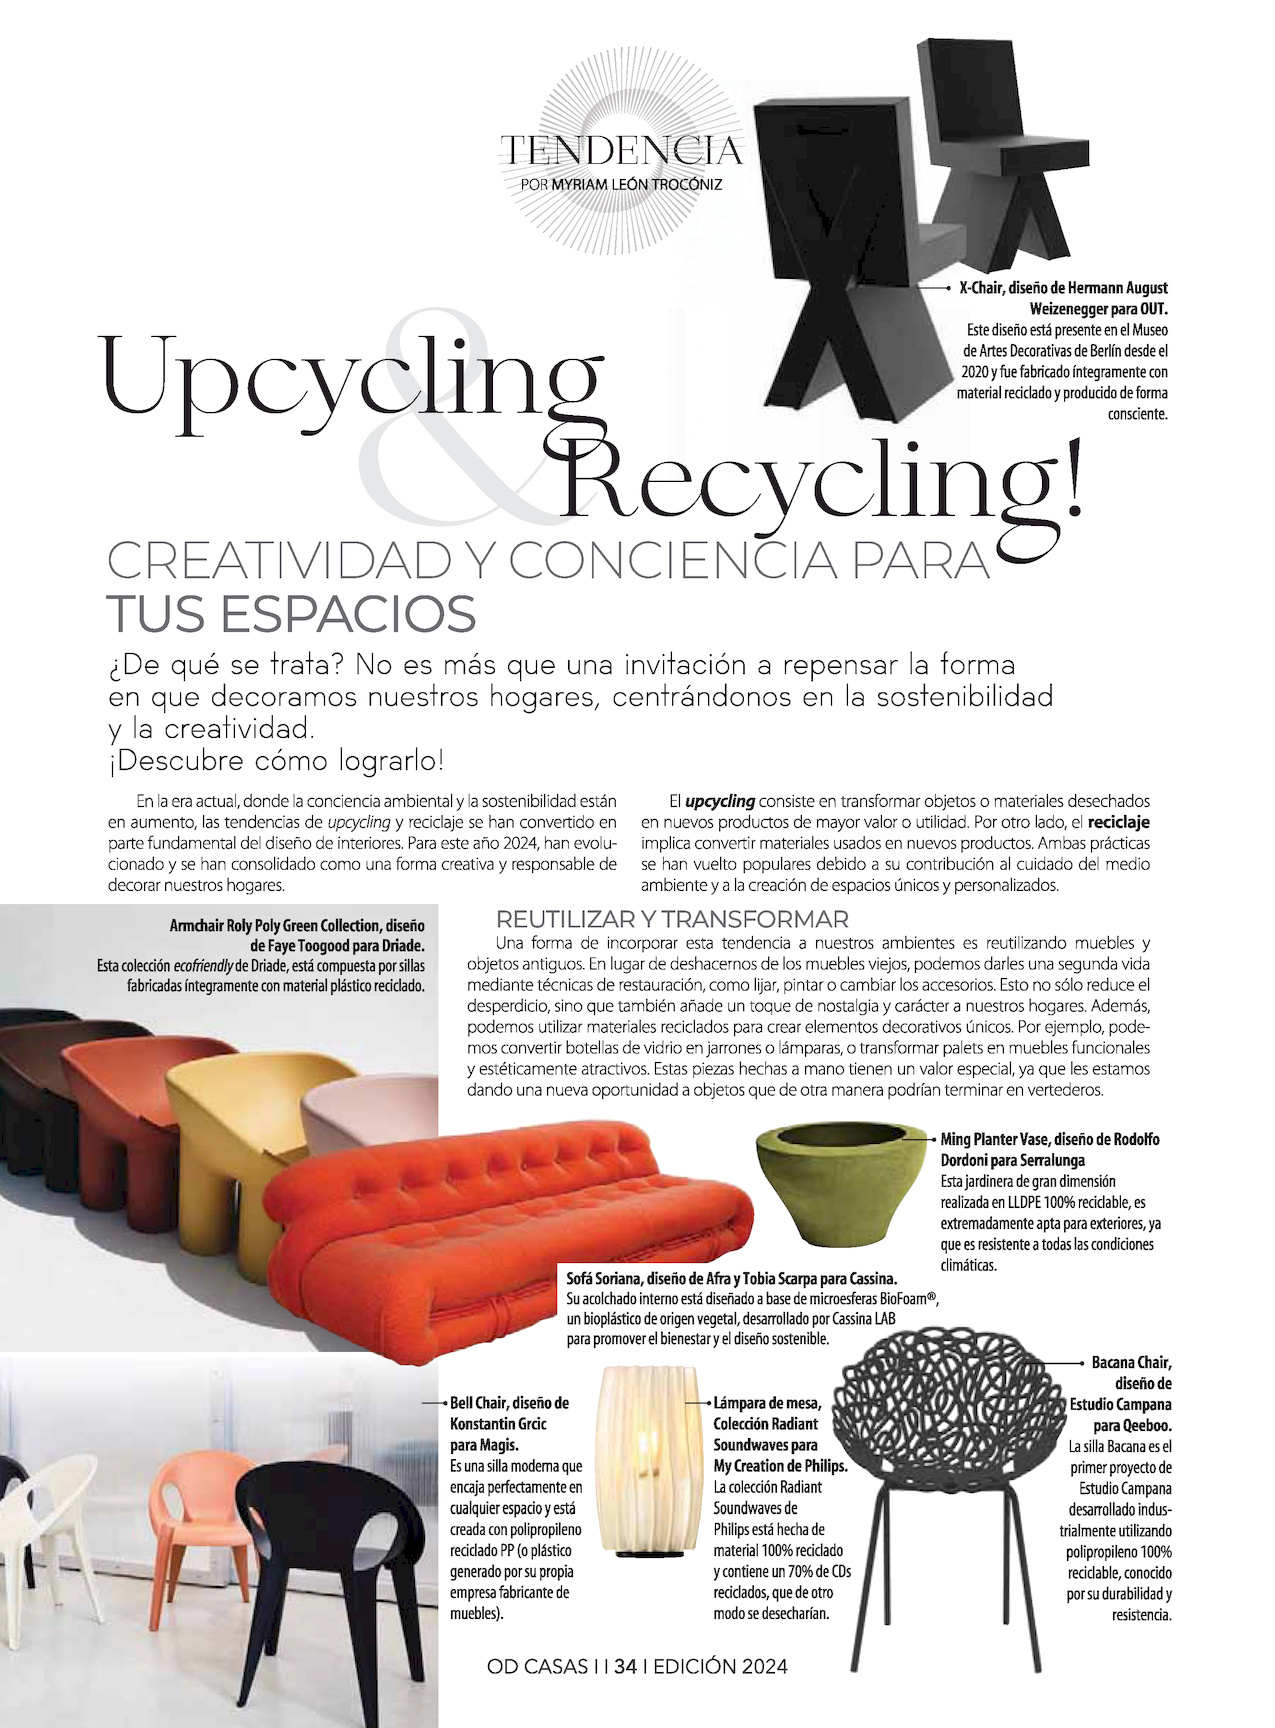 39-REV Tendencia: Upcycling & recycling